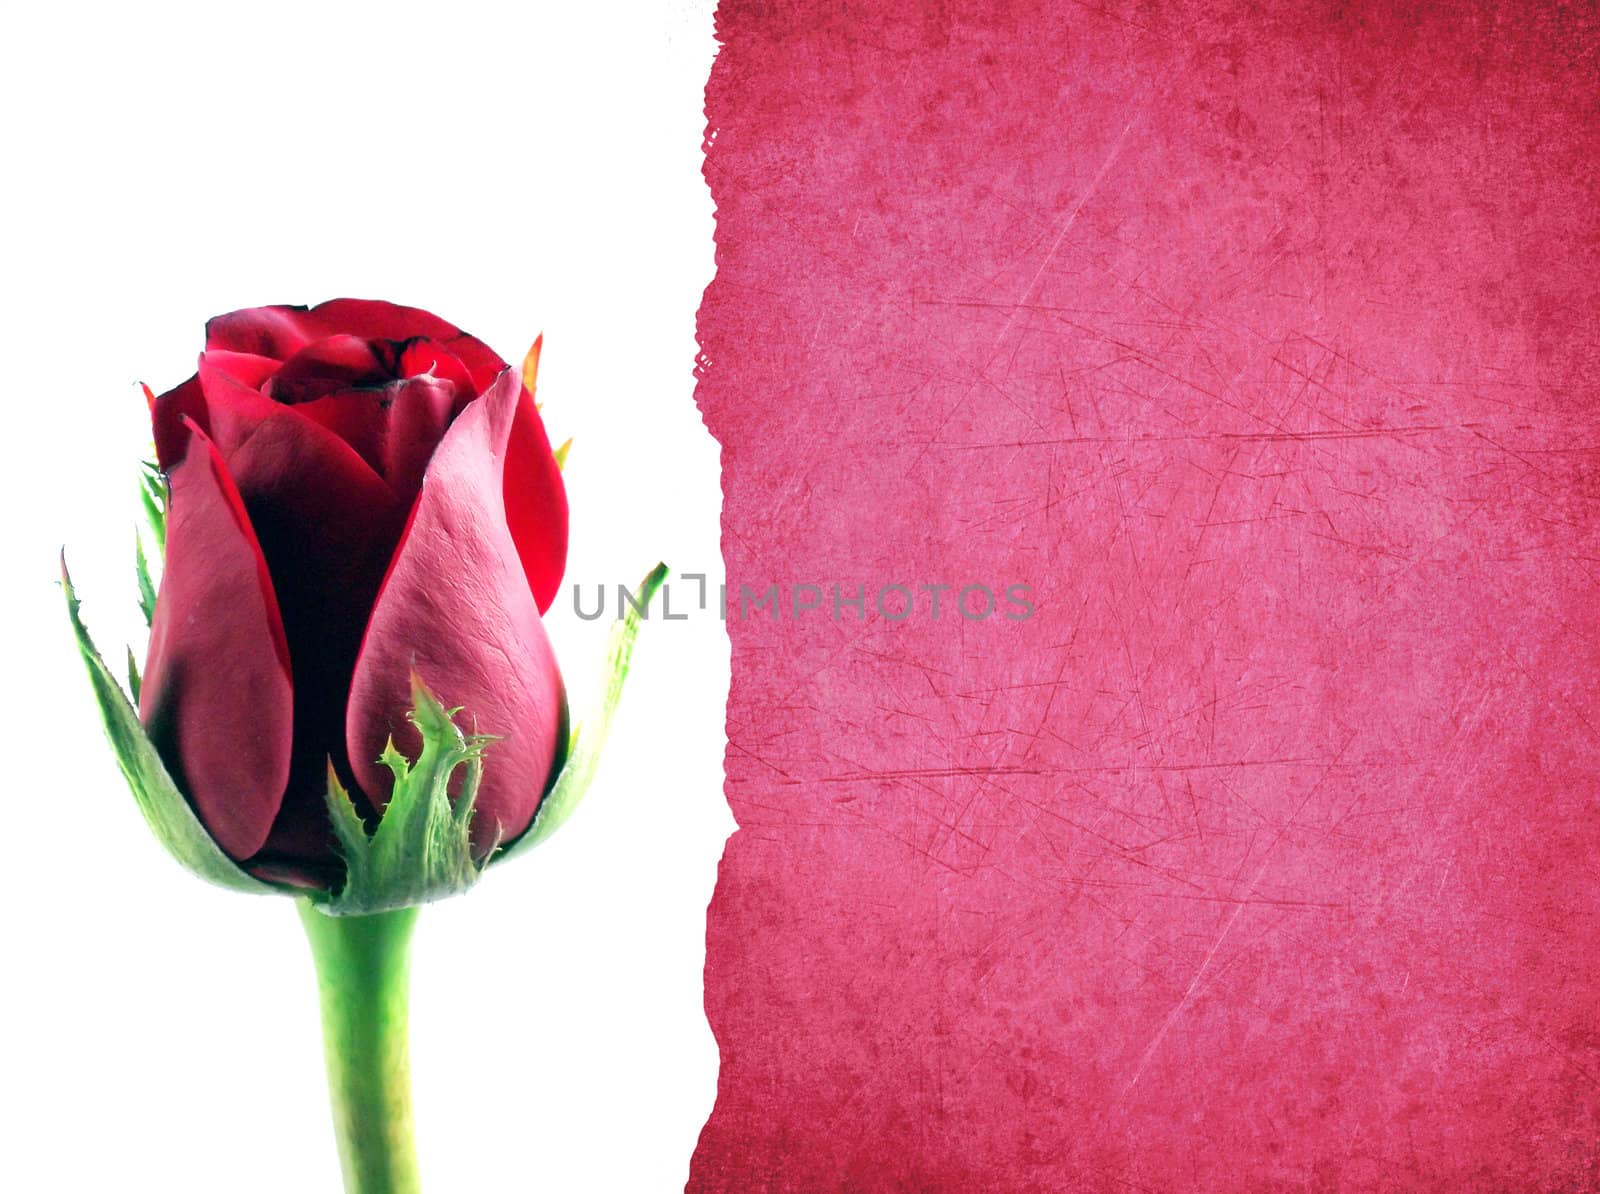 red rose by designsstock